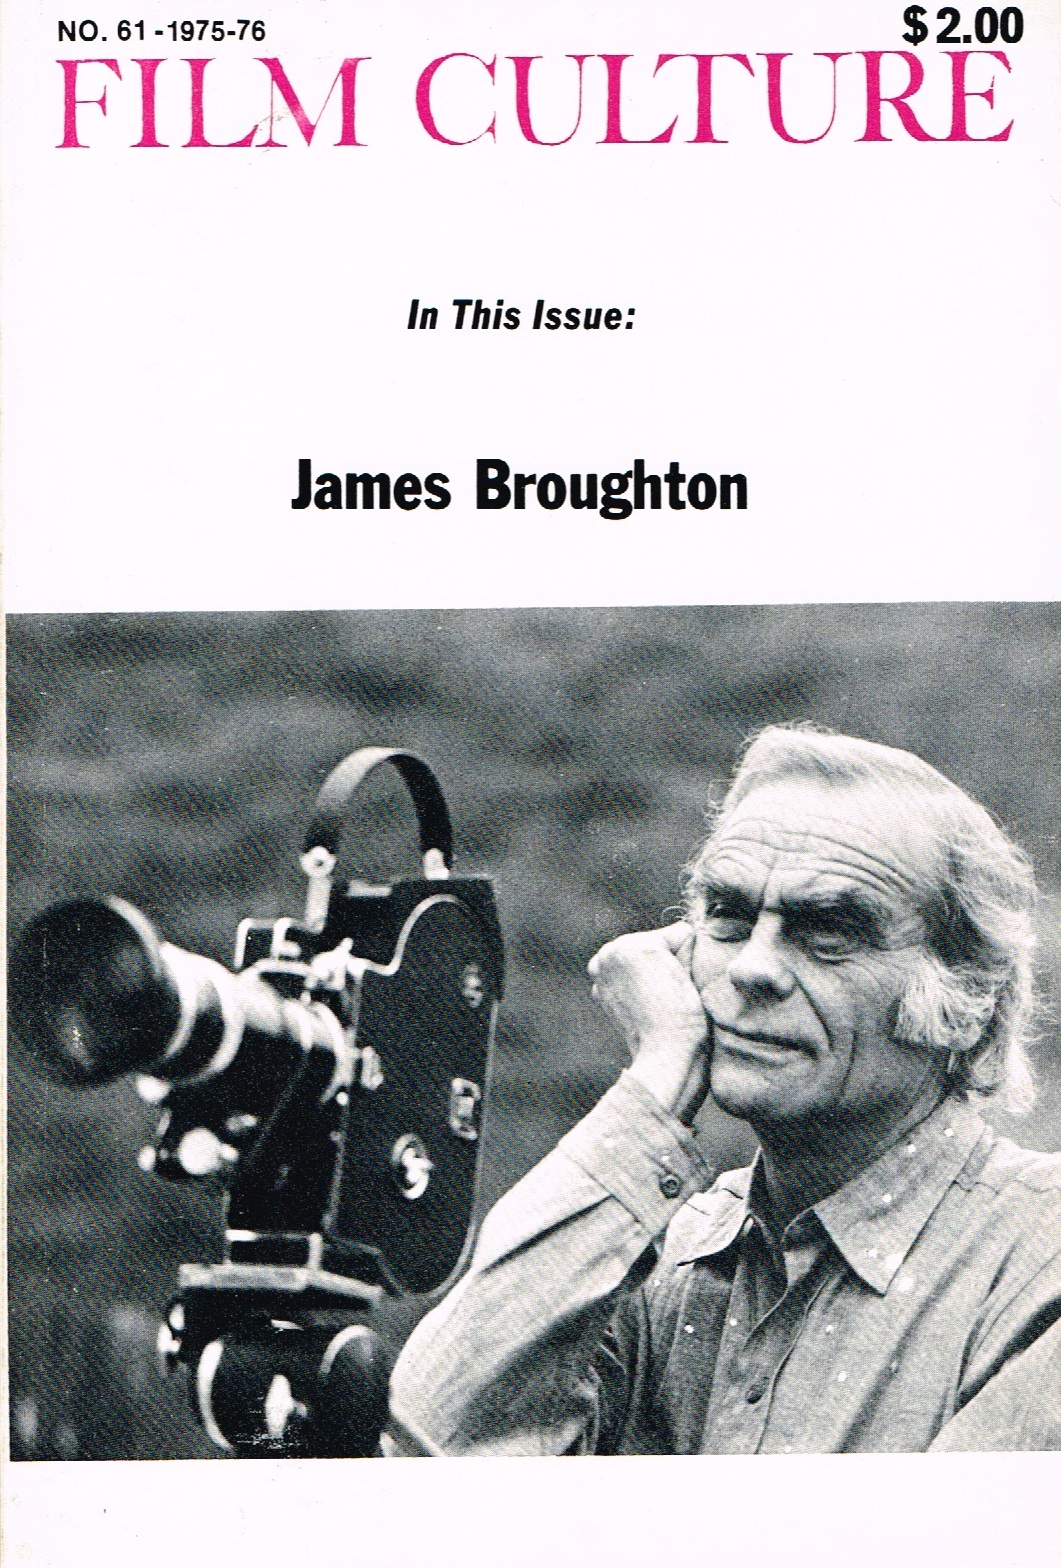 (FILM CULTURE) (BROUGHTON, JAMES). Mekas, Jonas & P. Adams Sitney, Editors - FILM CULTURE NUMBER 61 - 1975-1976